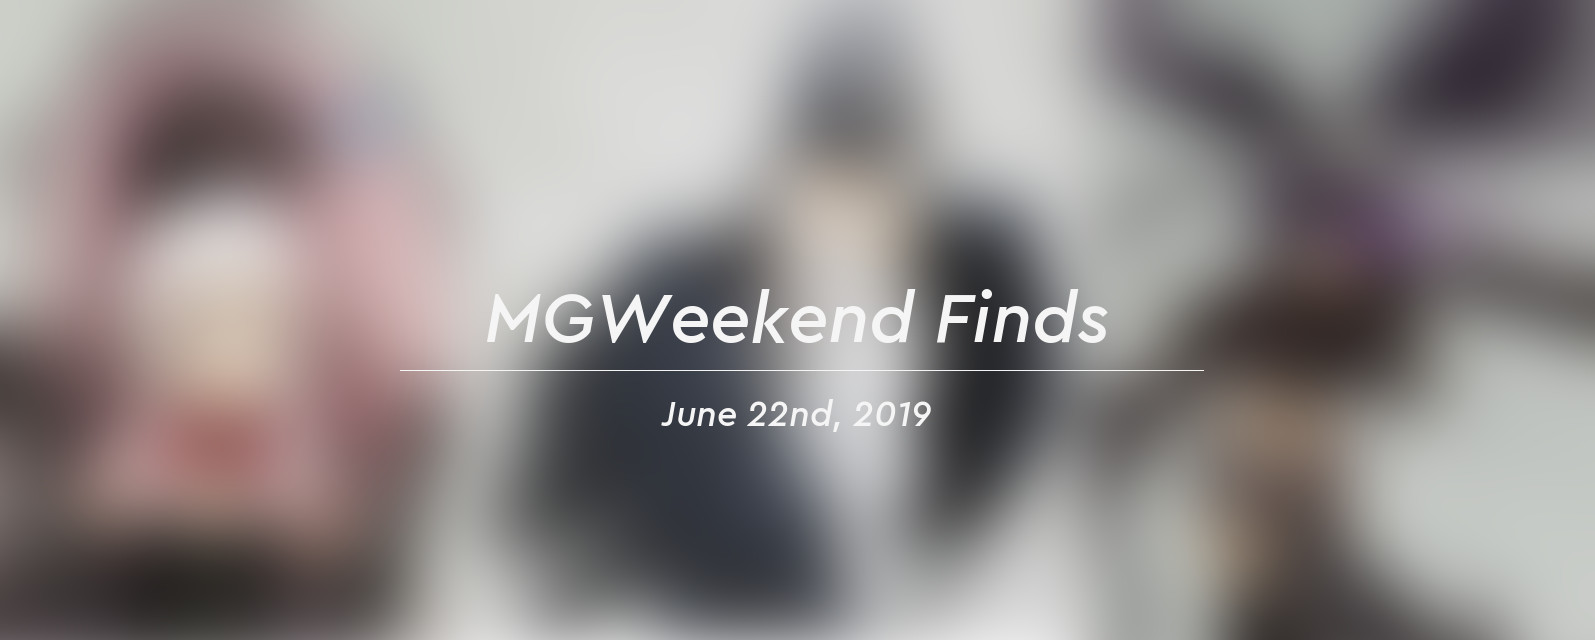 mgw finds 2019 06 22 header